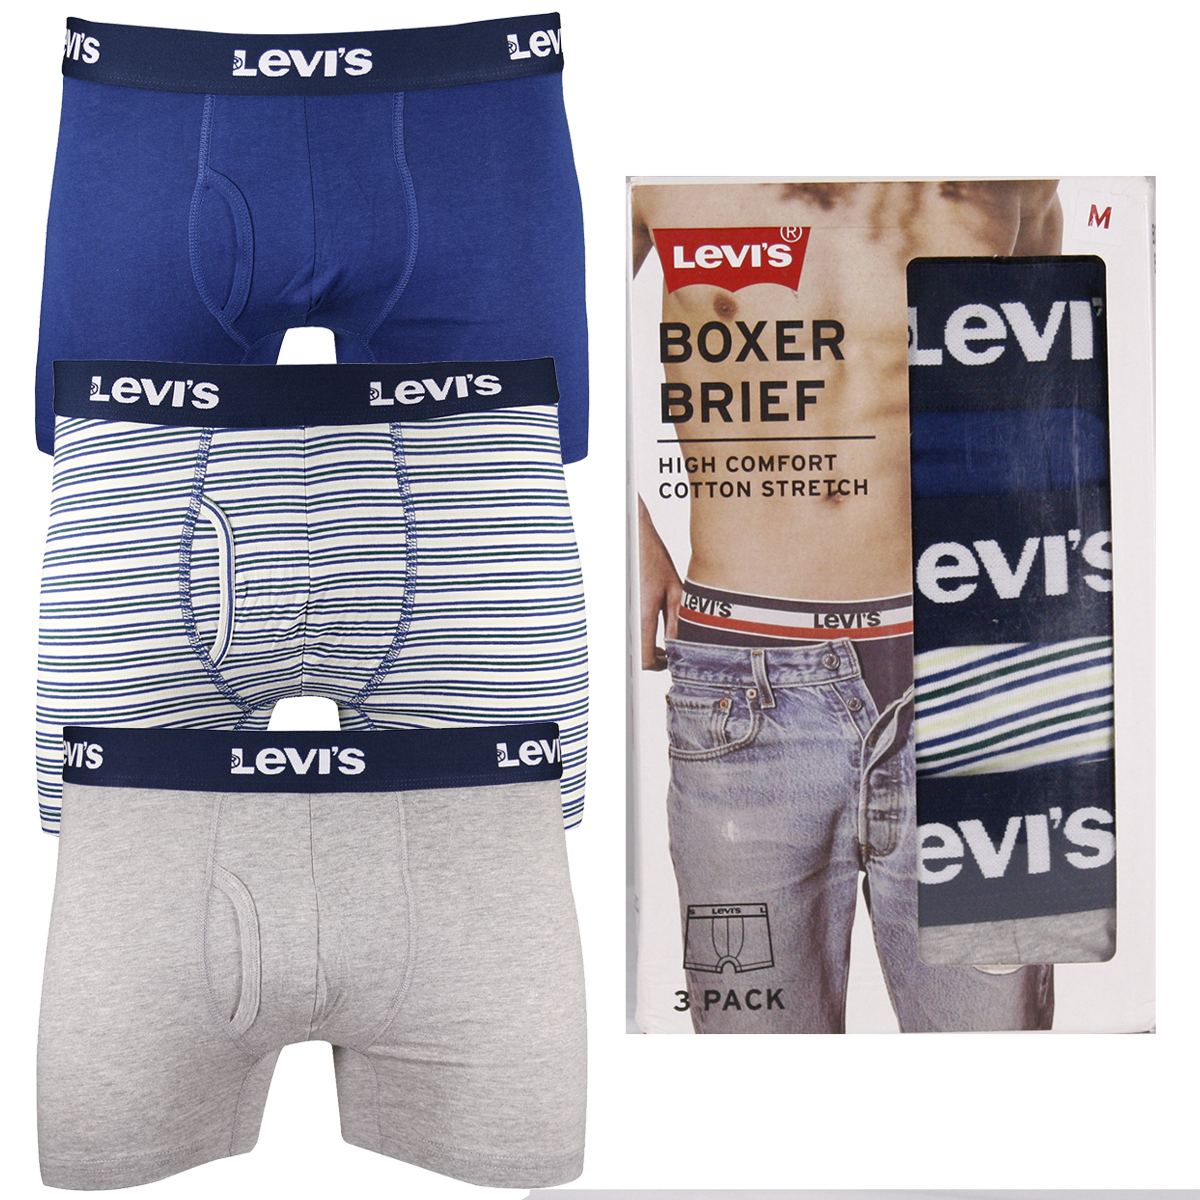 IZOD Men's Underwear - Classic Knit Boxers (8 Pack), Blue/Stripe